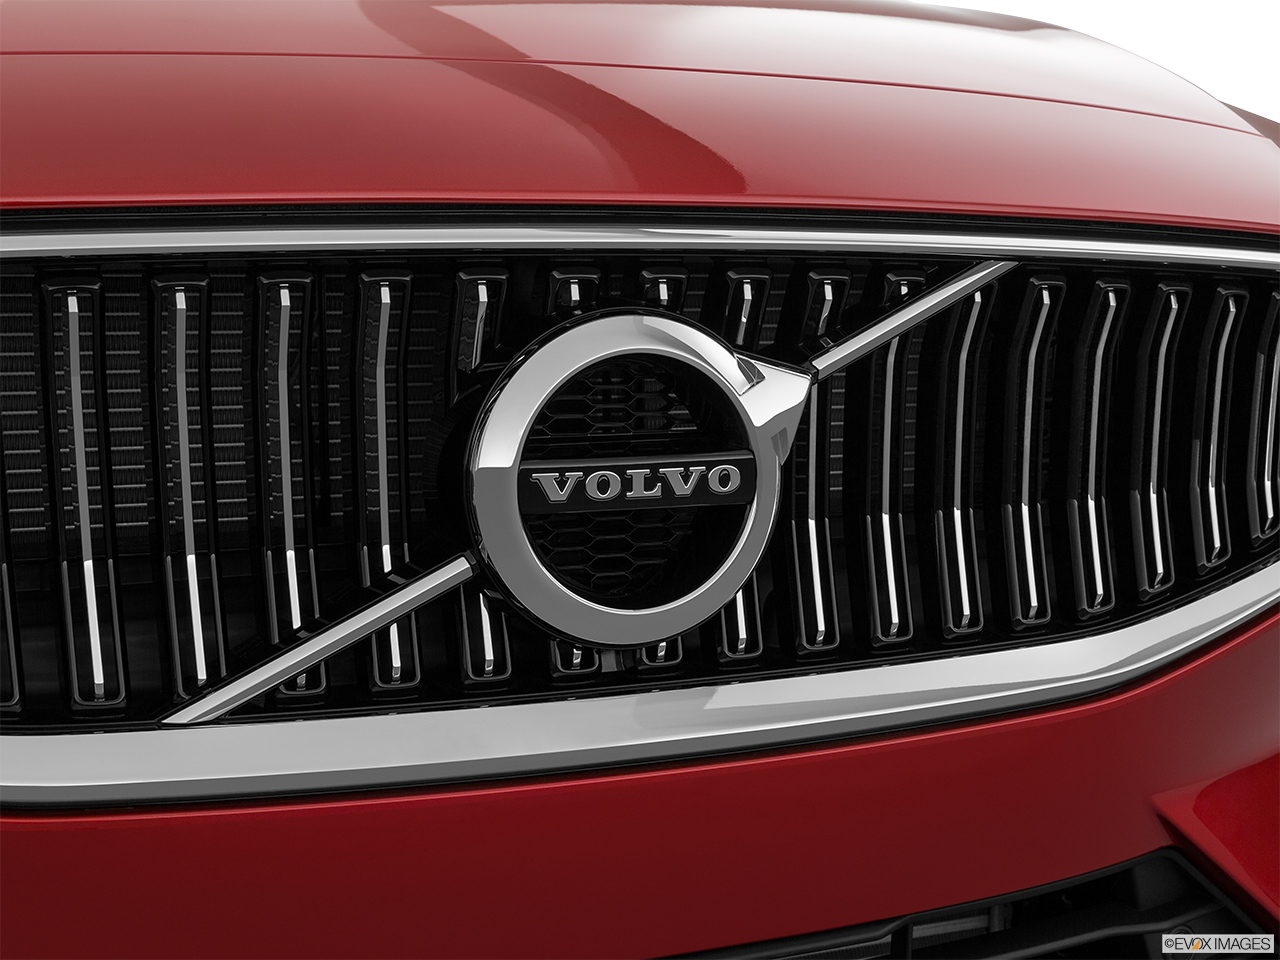 2020 Volvo S60 T5 Inscription Rear manufacture badge/emblem 